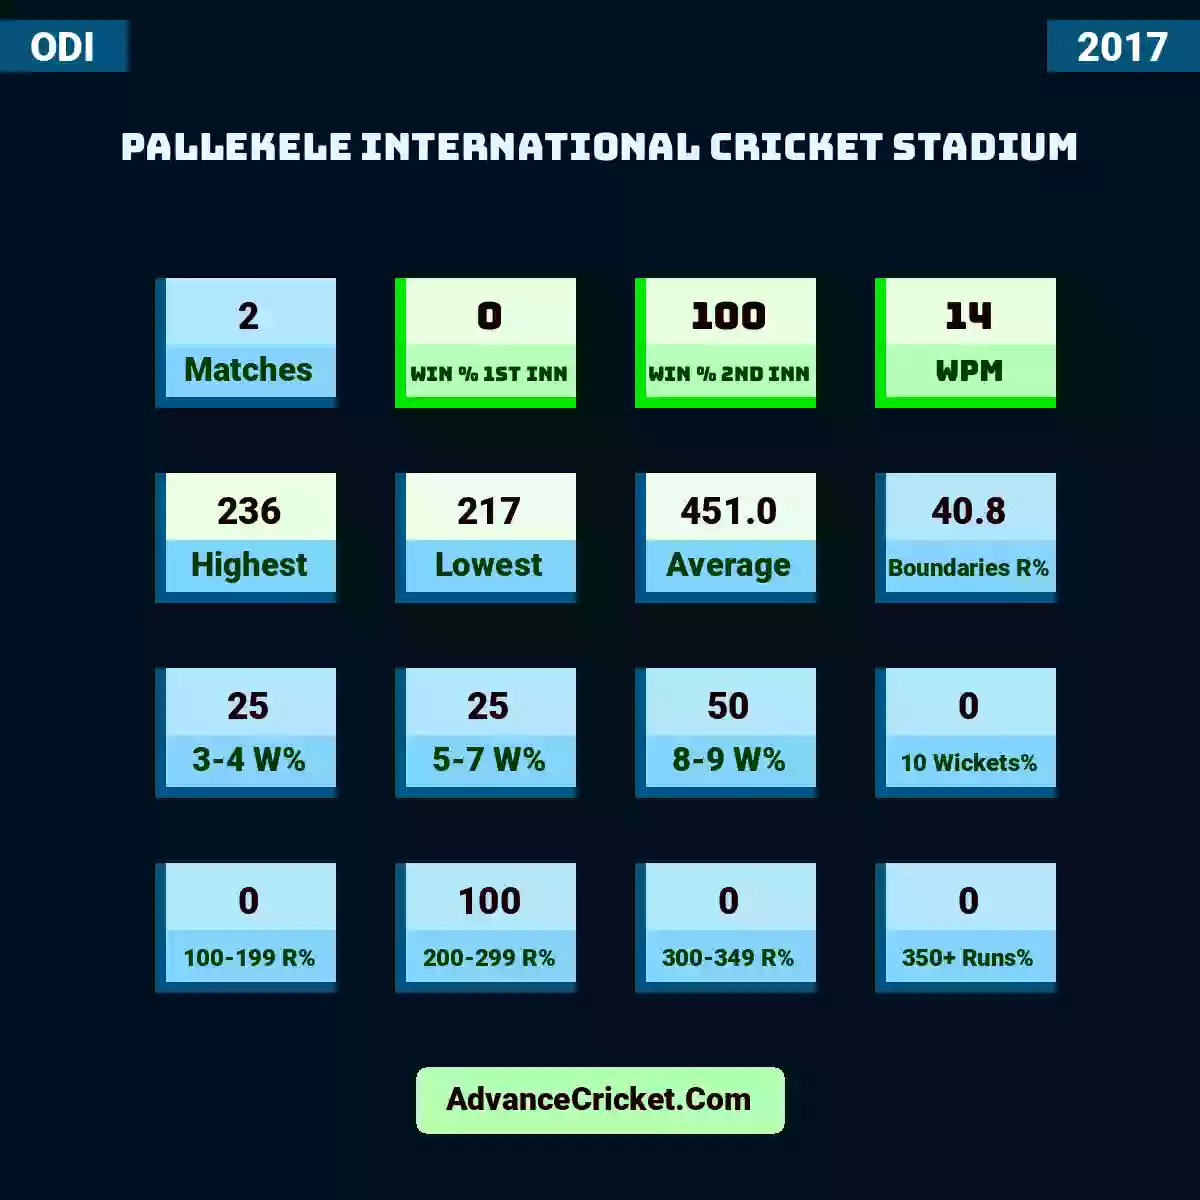 Image showing Pallekele International Cricket Stadium with Matches: 2, Win % 1st Inn: 0, Win % 2nd Inn: 100, WPM: 14, Highest: 236, Lowest: 217, Average: 451.0, Boundaries R%: 40.8, 3-4 W%: 25, 5-7 W%: 25, 8-9 W%: 50, 10 Wickets%: 0, 100-199 R%: 0, 200-299 R%: 100, 300-349 R%: 0, 350+ Runs%: 0.